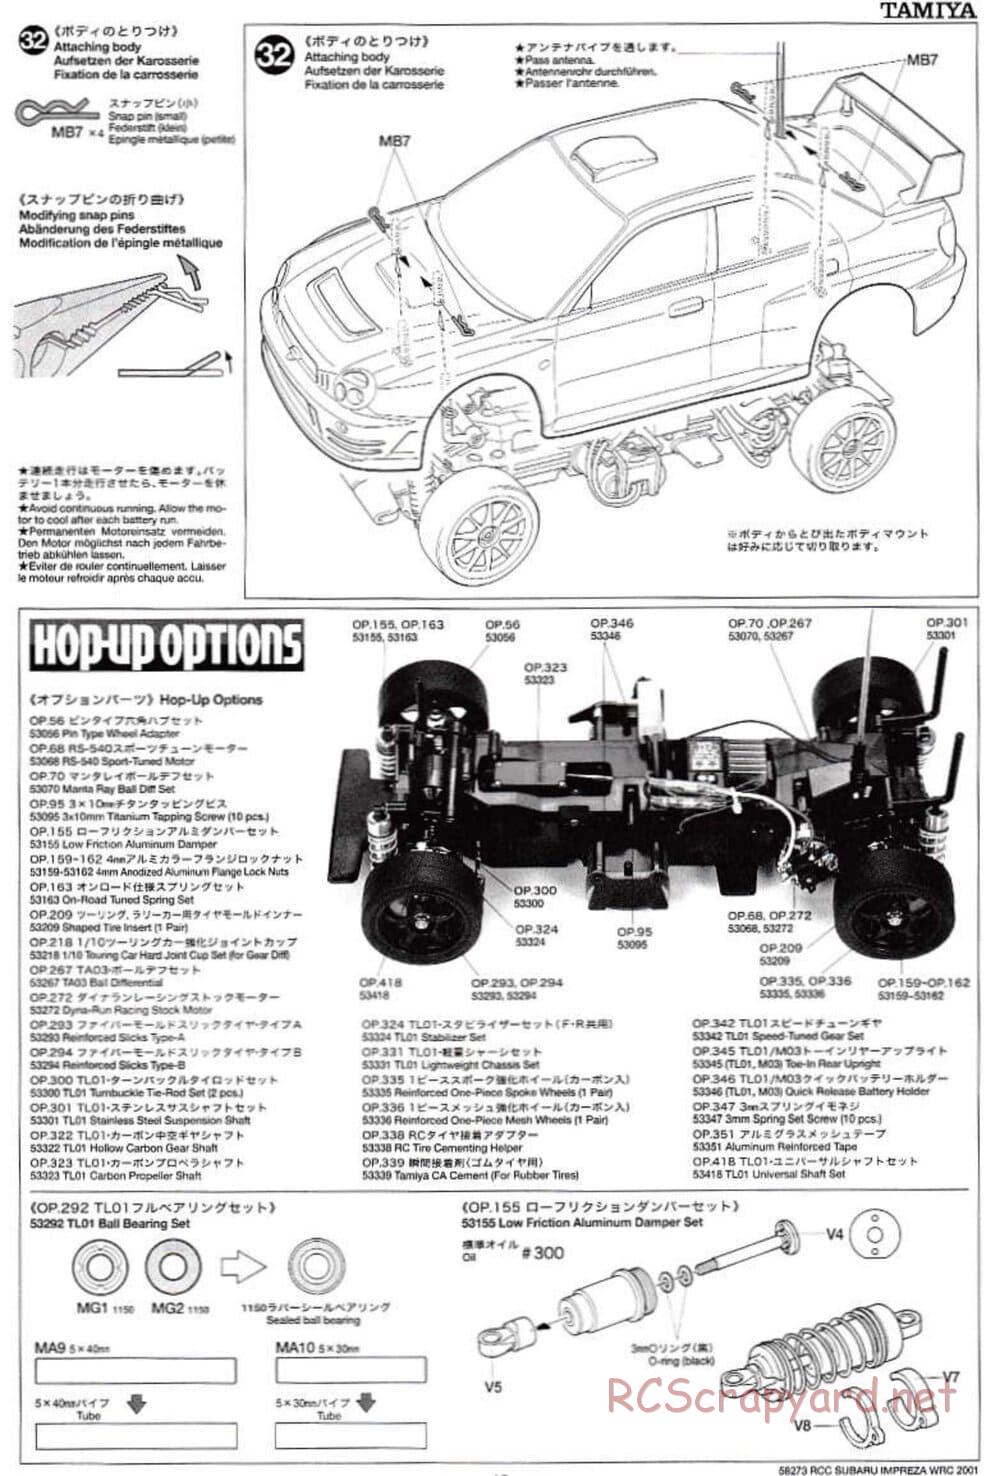 Tamiya - Subaru Impreza WRC 2001 - TL-01 Chassis - Manual - Page 19